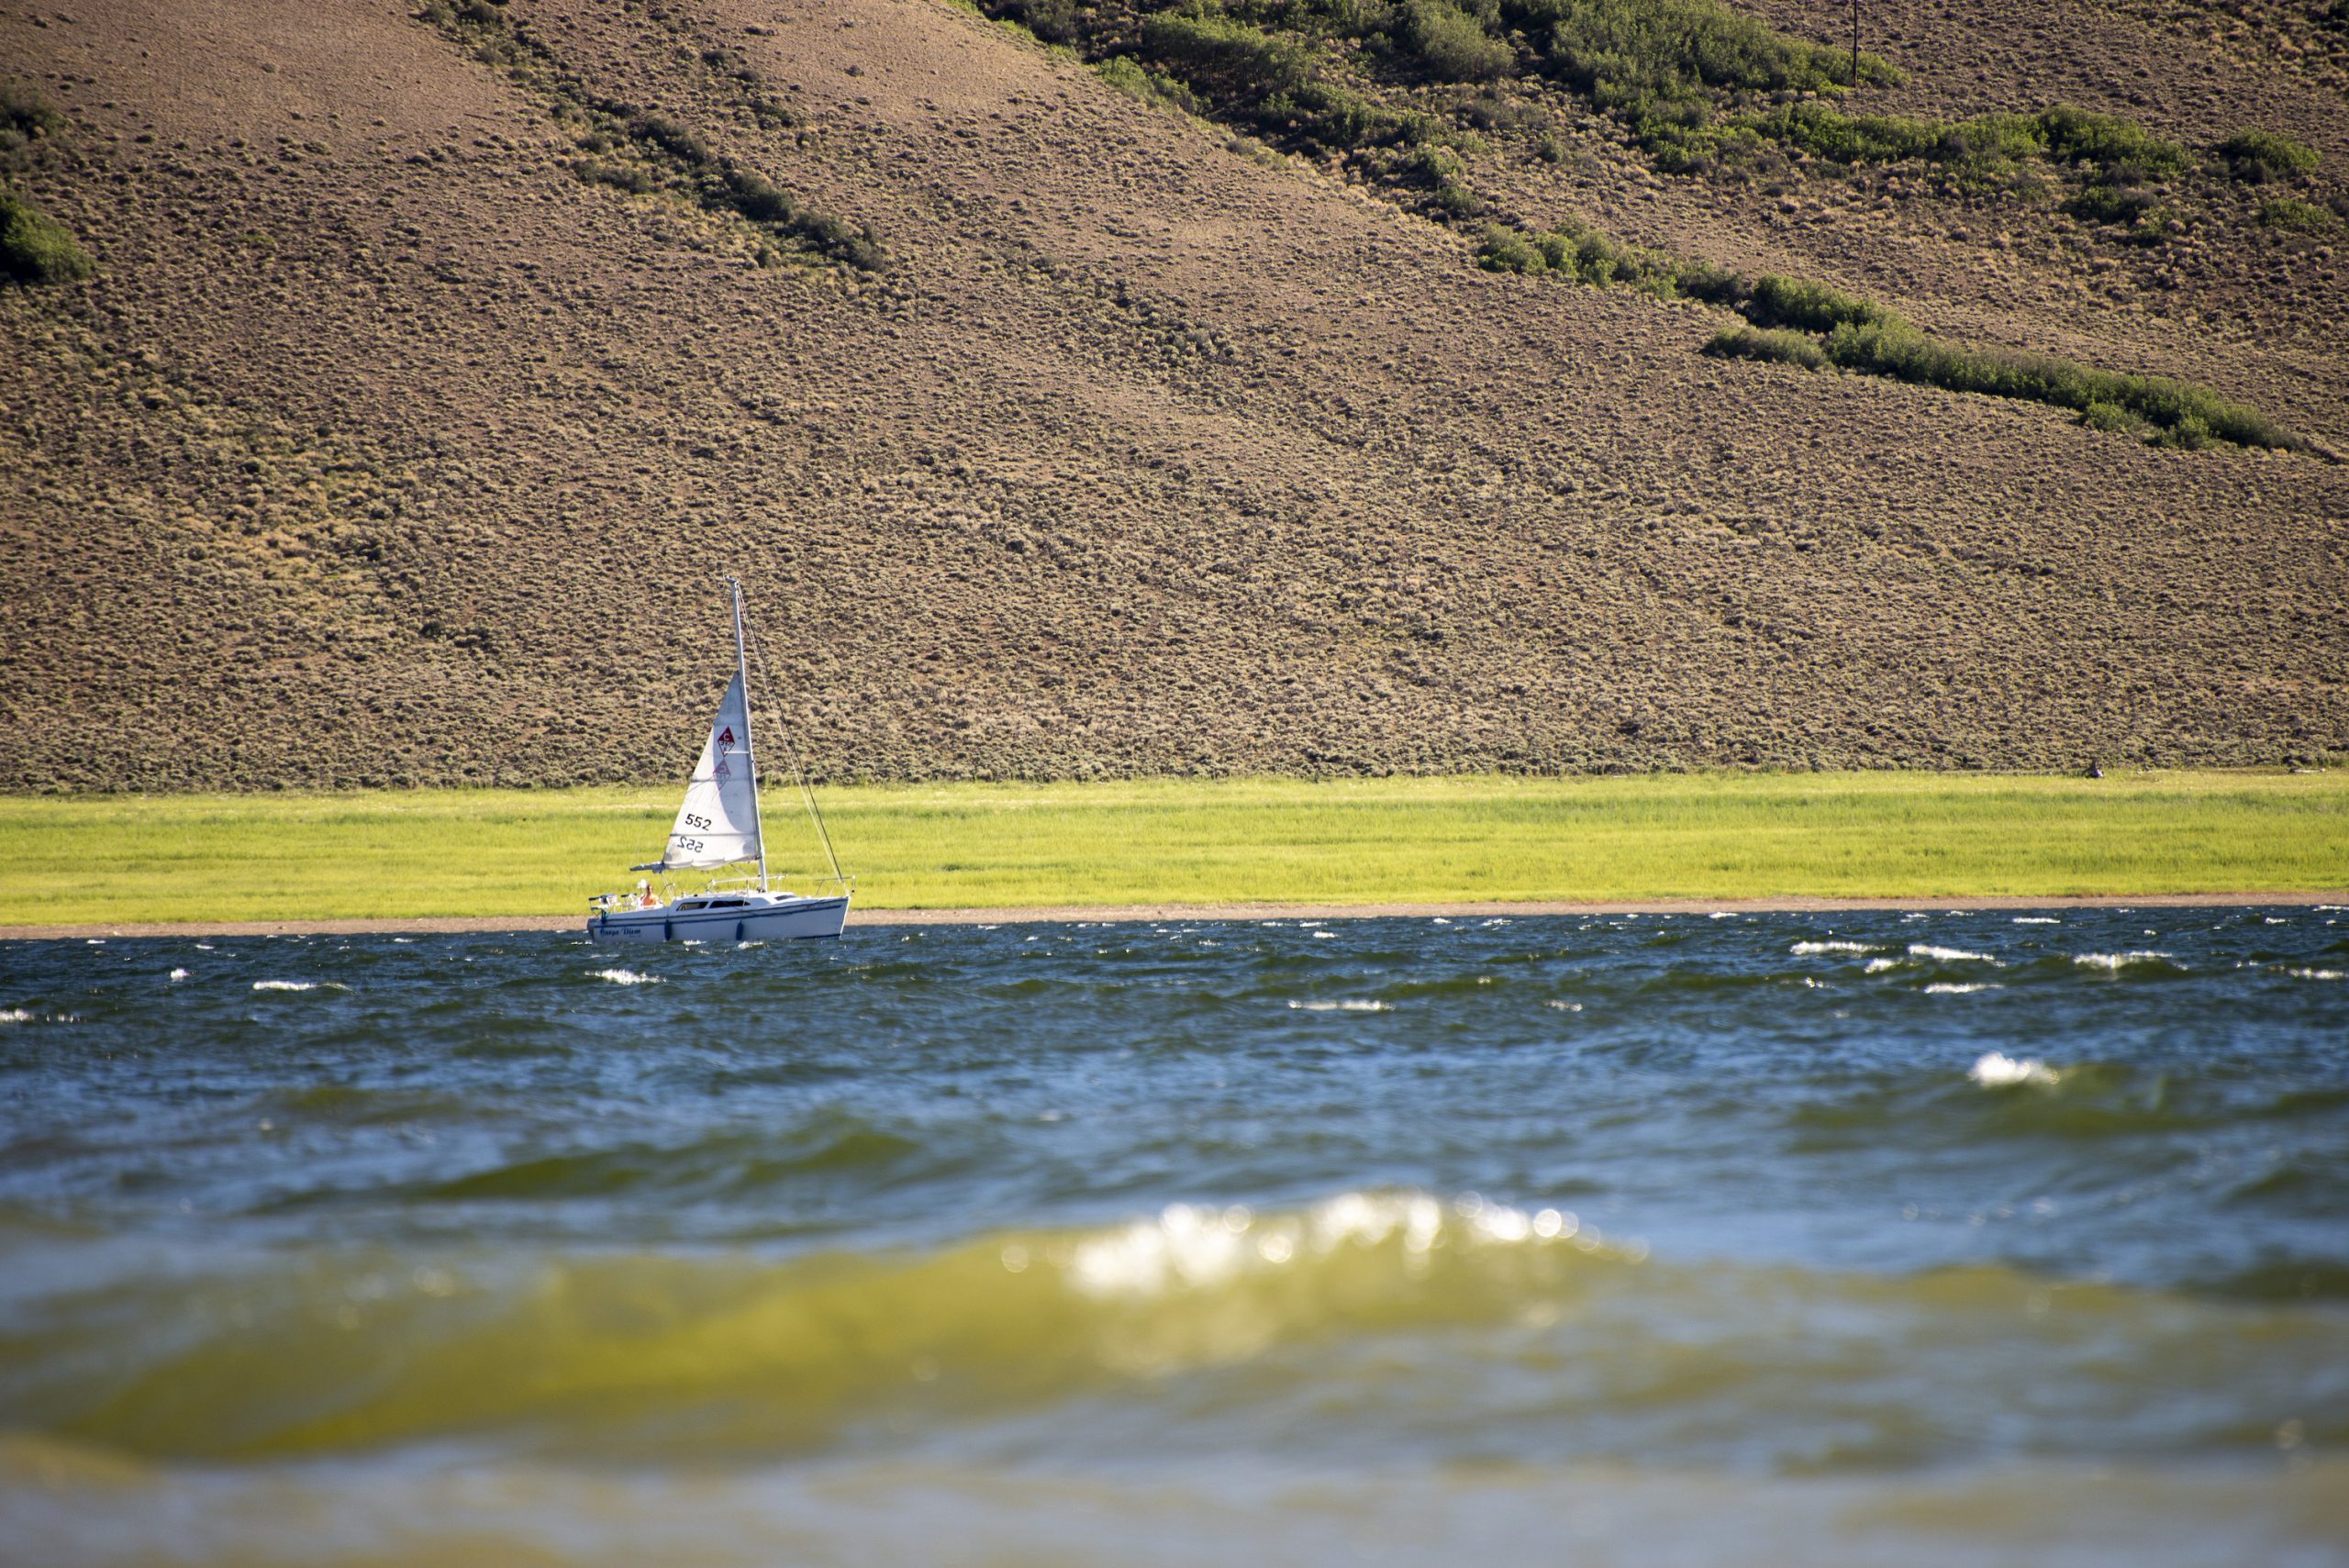 A sailboat on a lake